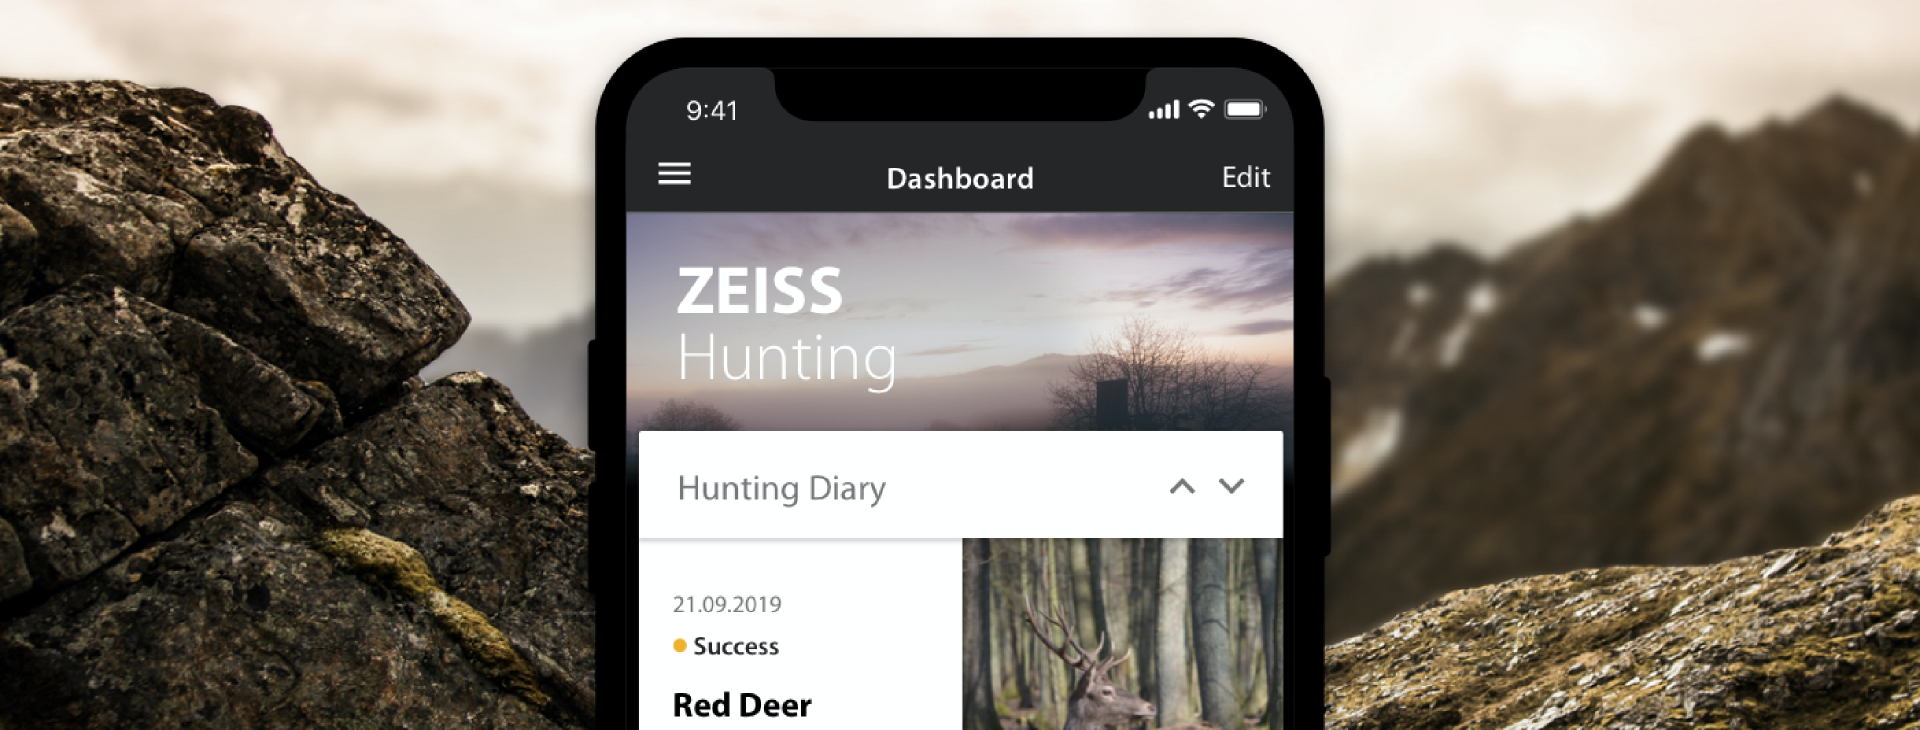 ZEISS Hunting App Header Image